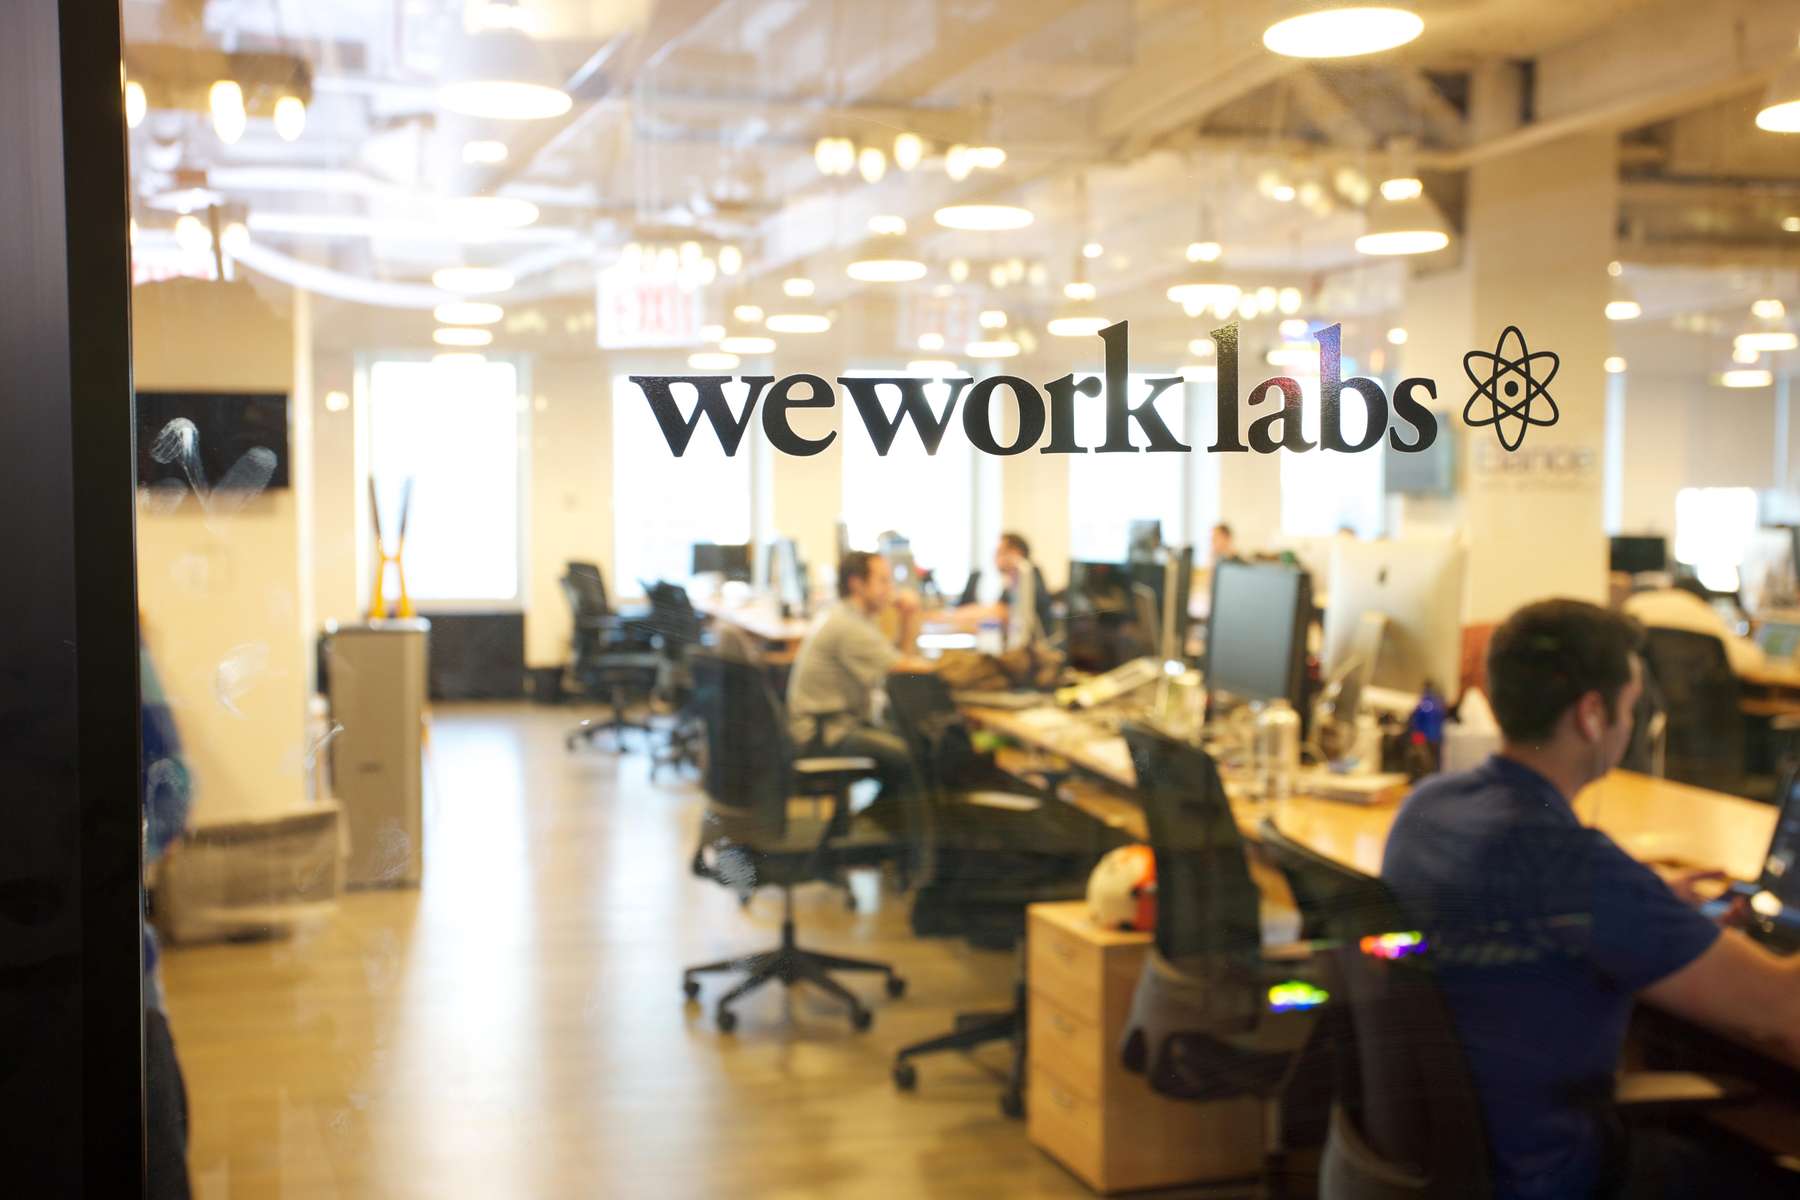 We Work Labs, 222 Broadway, NYC